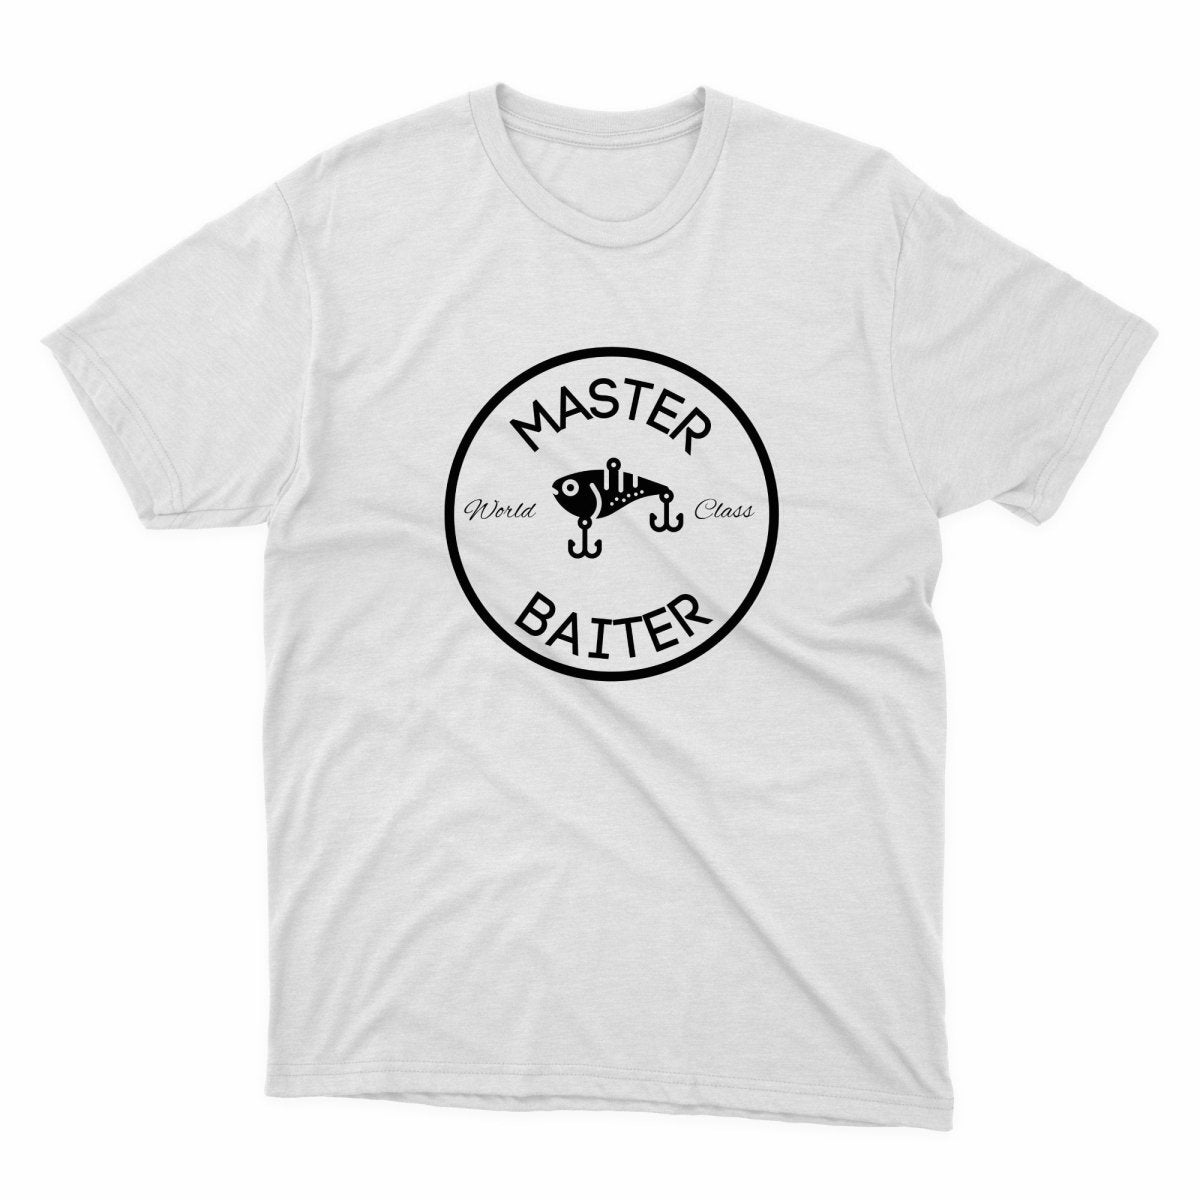 Master Baiter Shirt - stickerbullMaster Baiter ShirtShirtsPrintifystickerbull22354914592893582195WhiteSa white t - shirt with a black and white logo